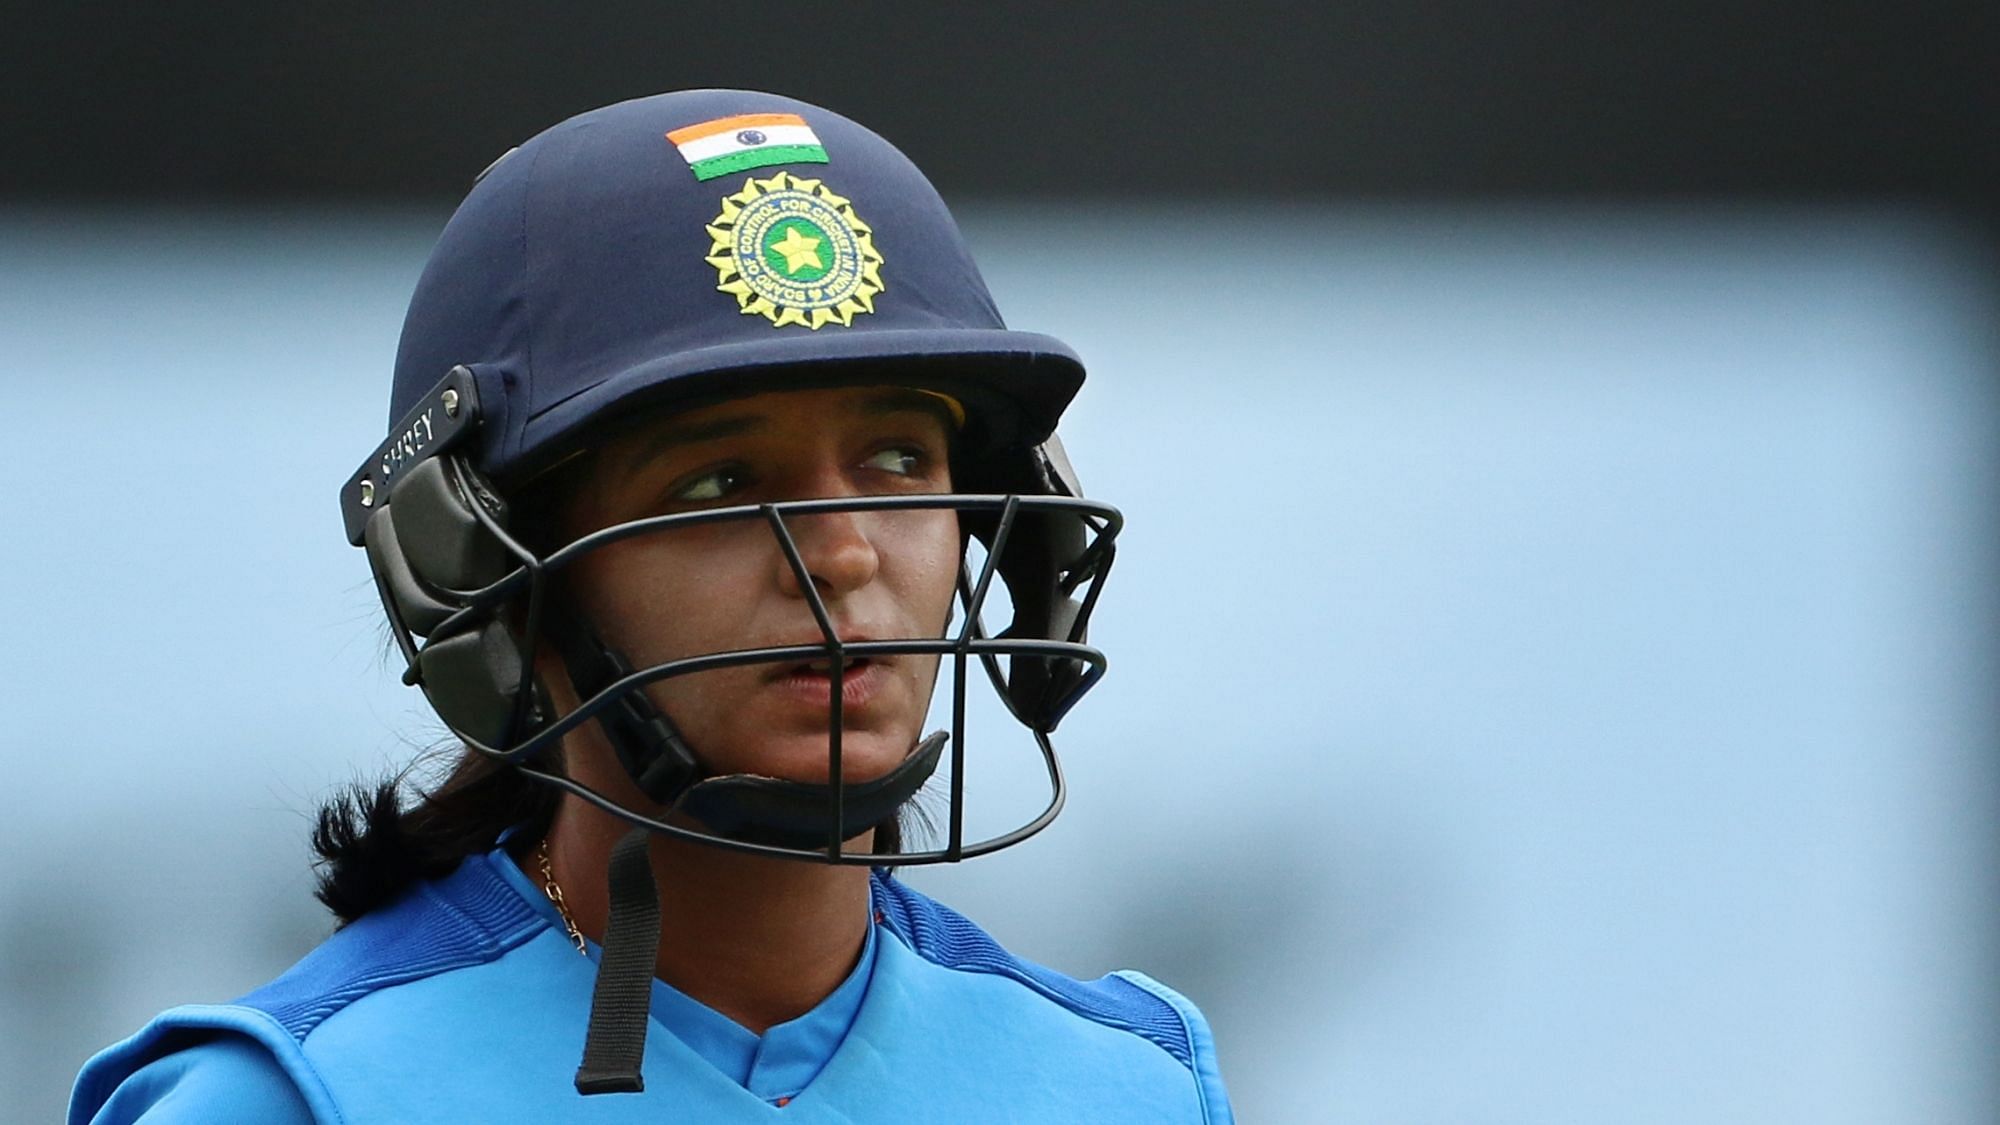 <div class="paragraphs"><p>Harmanpreet Kaur is India's vice-captain for the 2022 ODI Women's World Cup.&nbsp;</p></div>